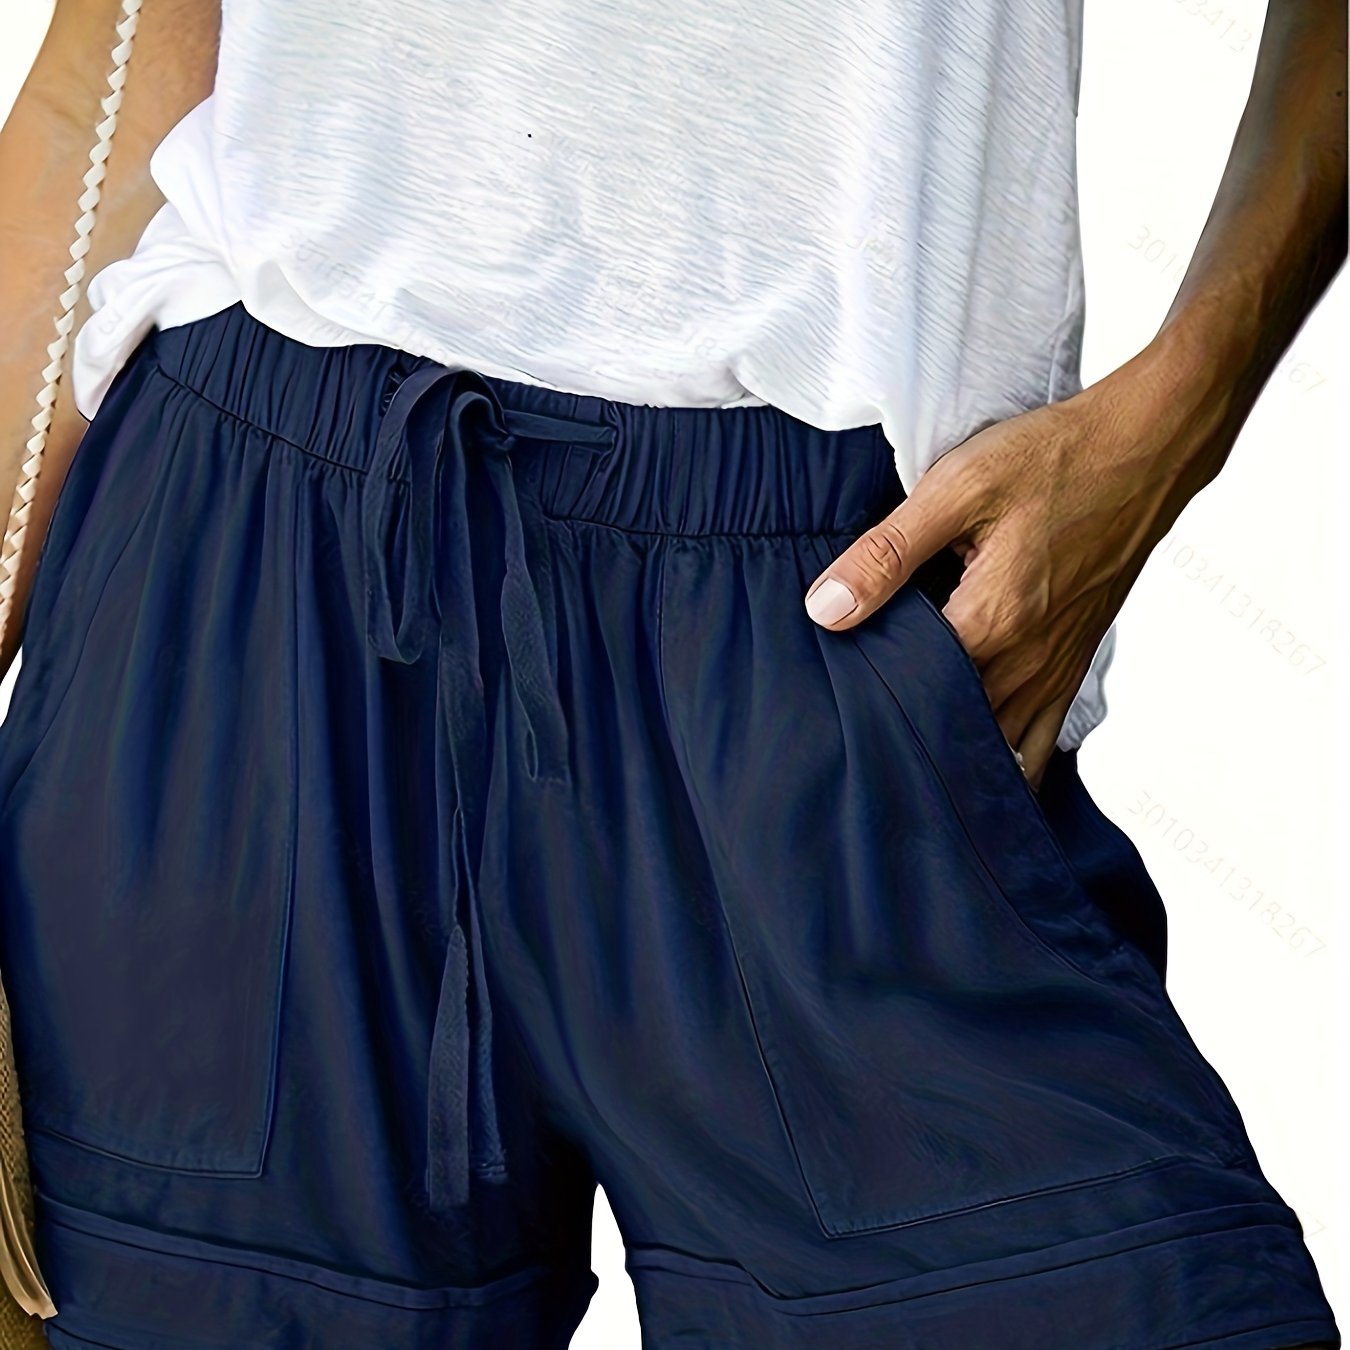 SENGPA Drawstring Elastic Waist Shorts, Casual Comfortable Shorts With Pockets For Summer, Women's Clothing